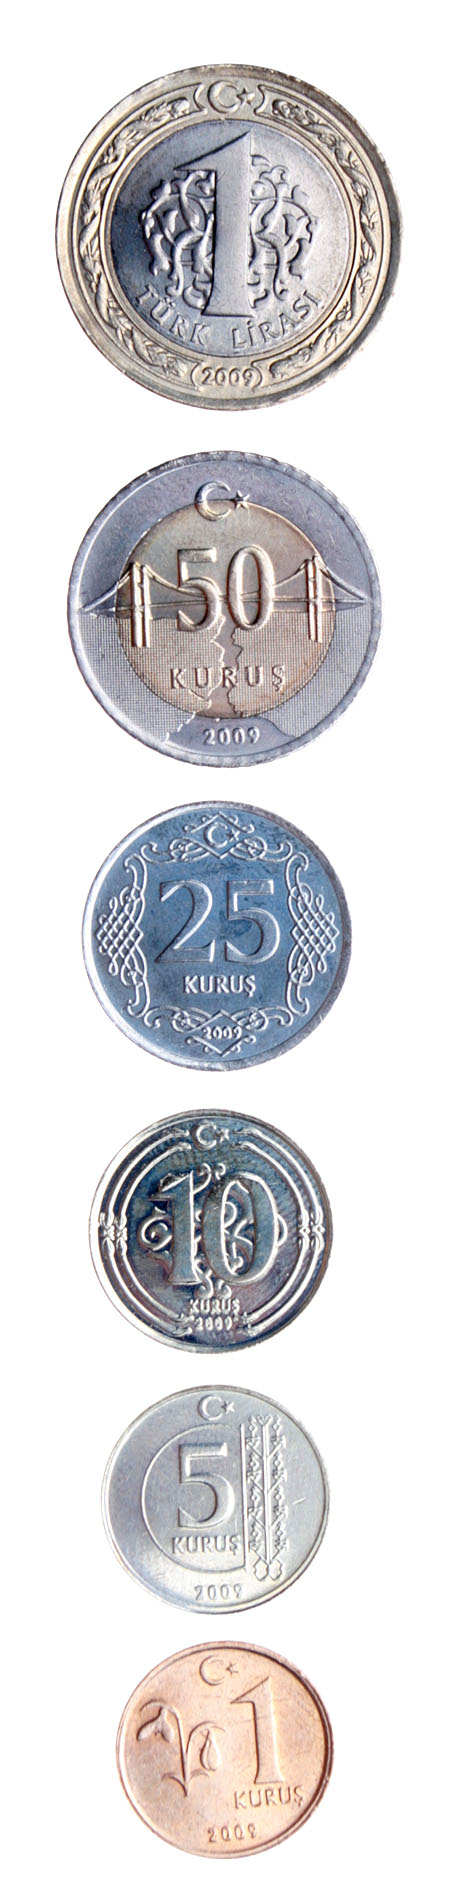 Комплект из 6 монет Металл Турция, 2009 гг 2009 г инфо 10603g.